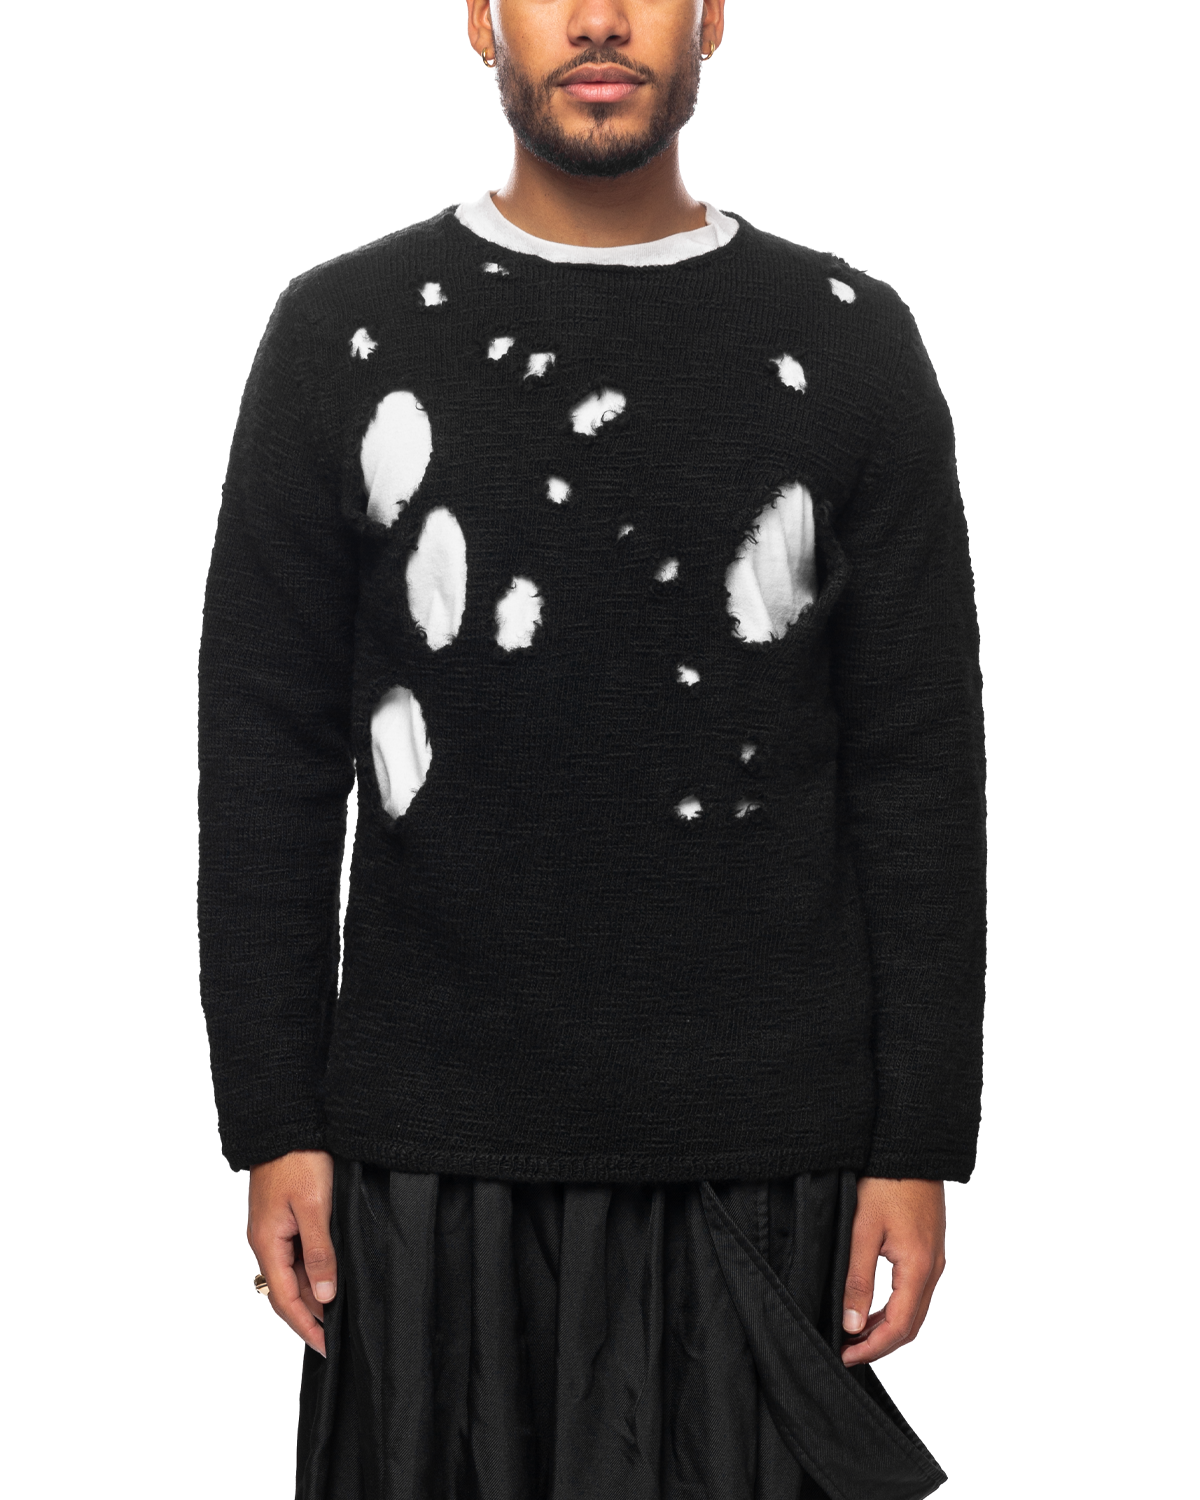 Distressed Crewneck Sweater Black